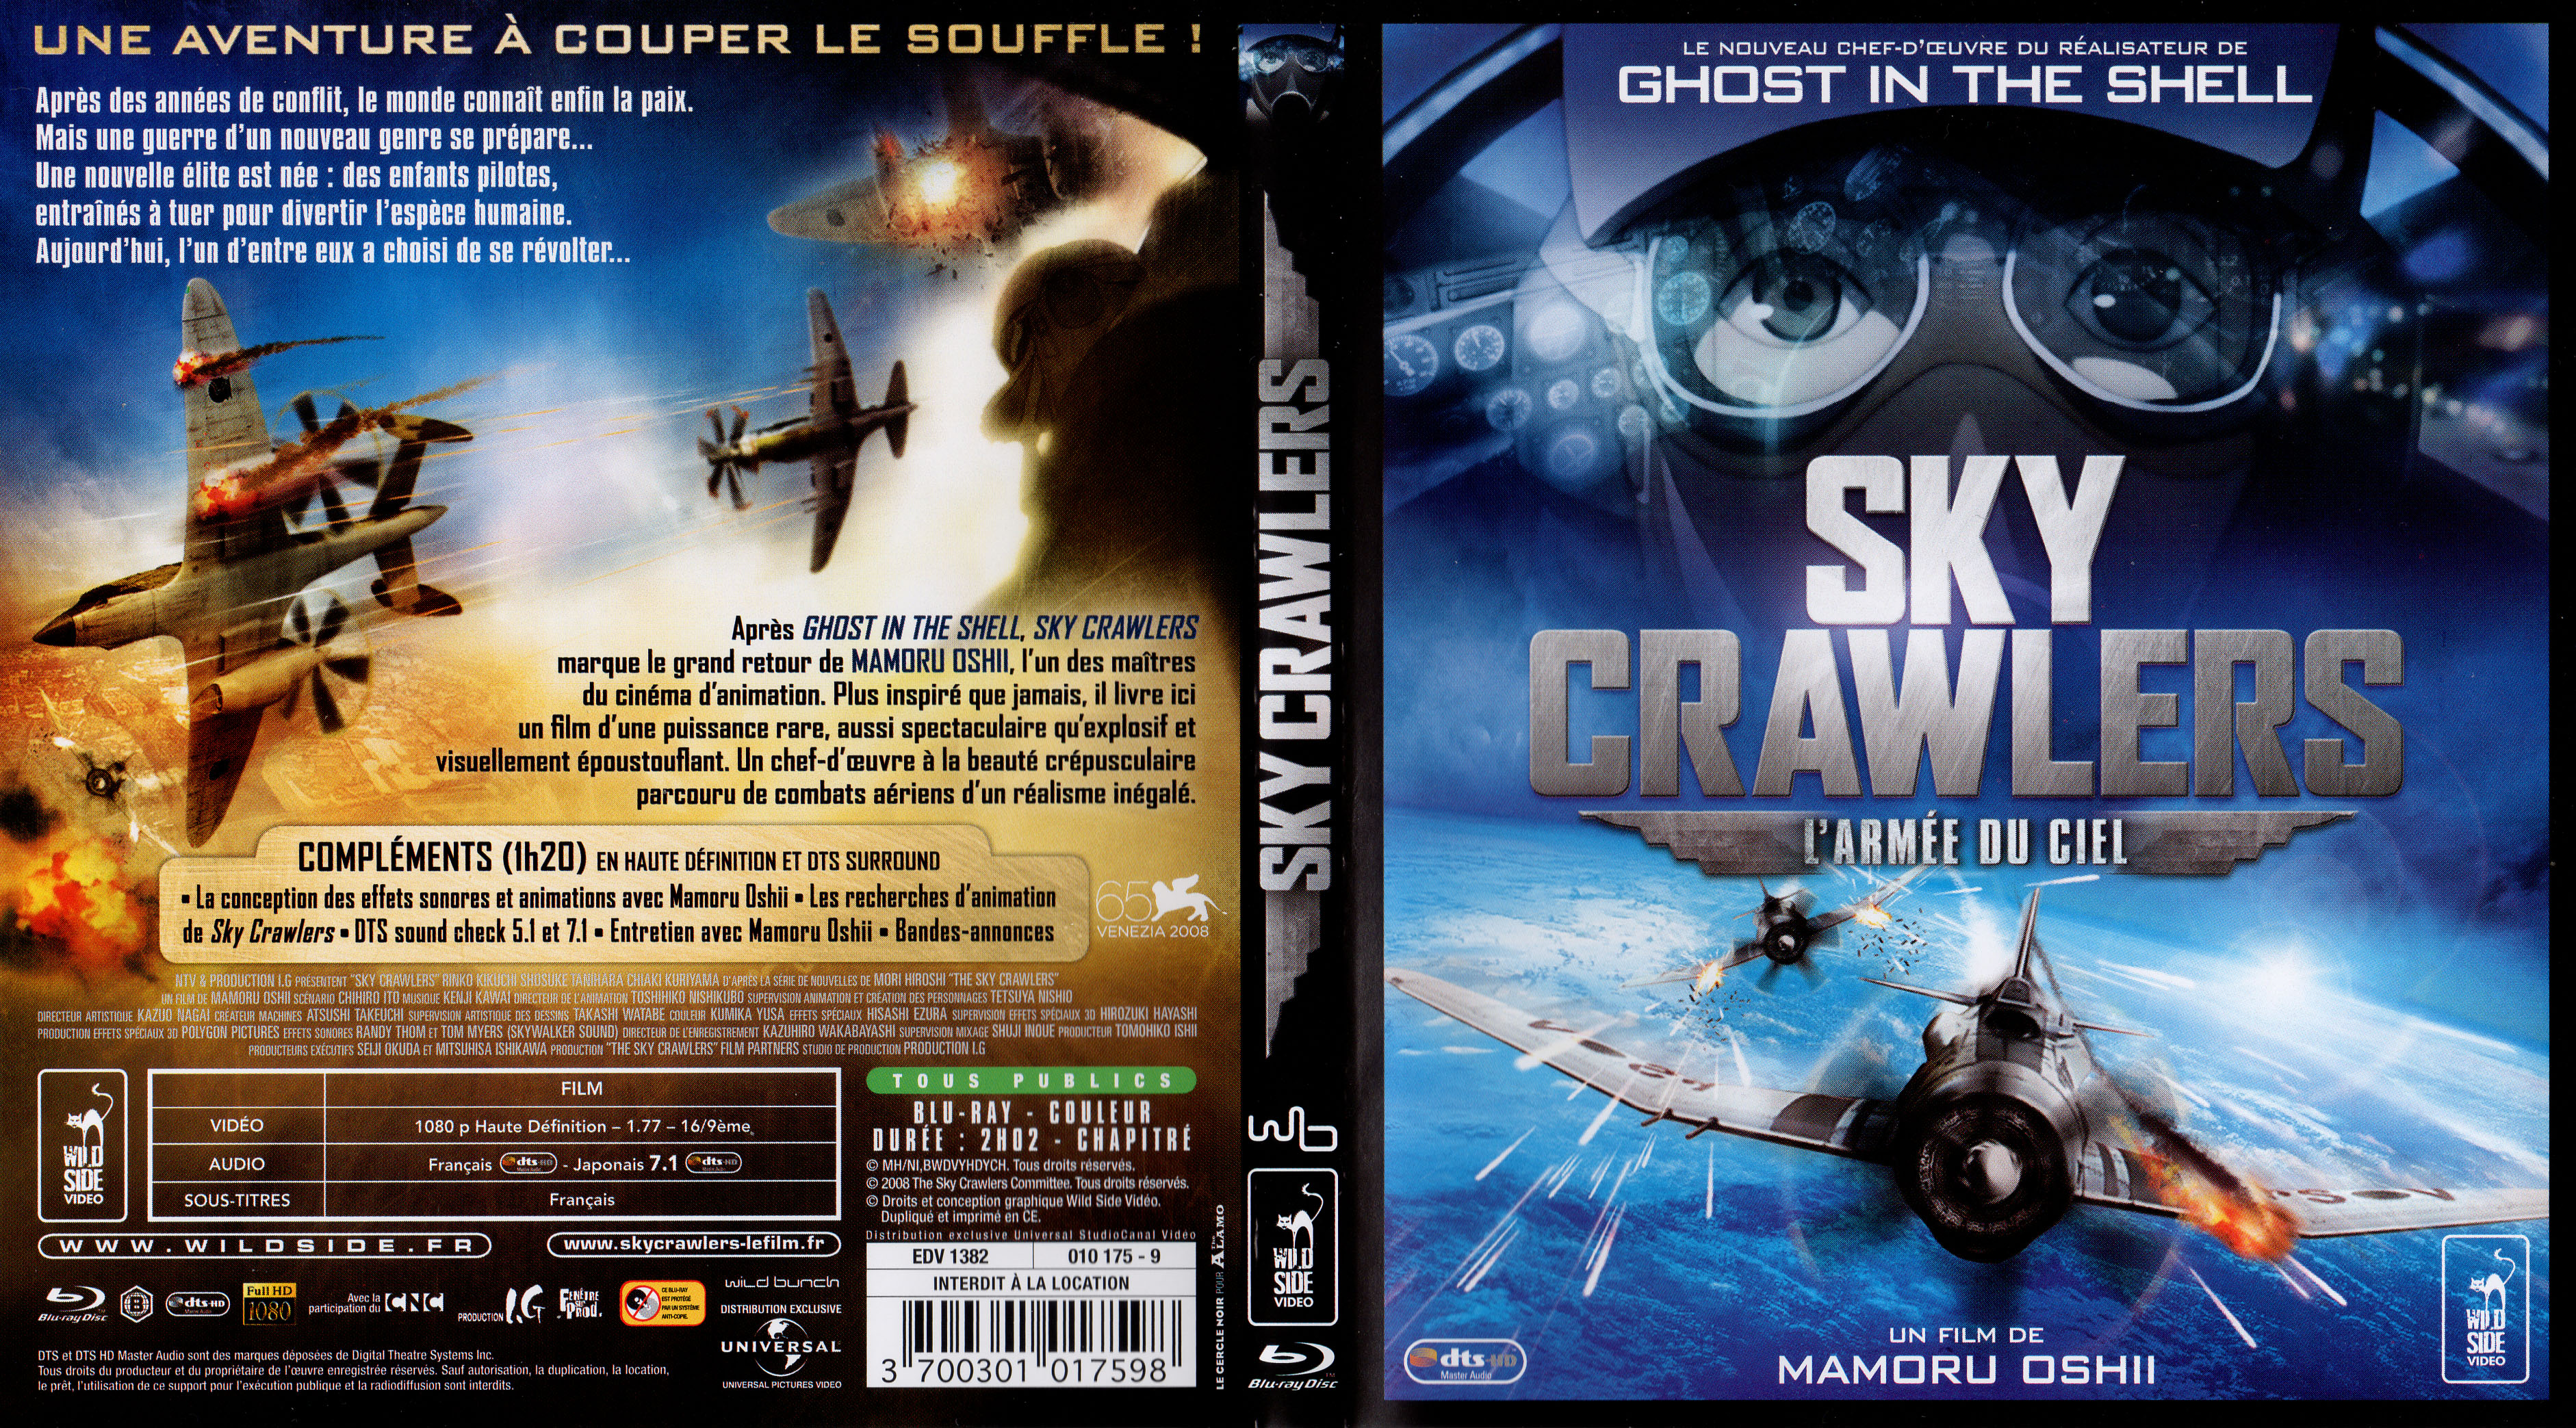 Jaquette DVD Sky crawlers (BLU-RAY)